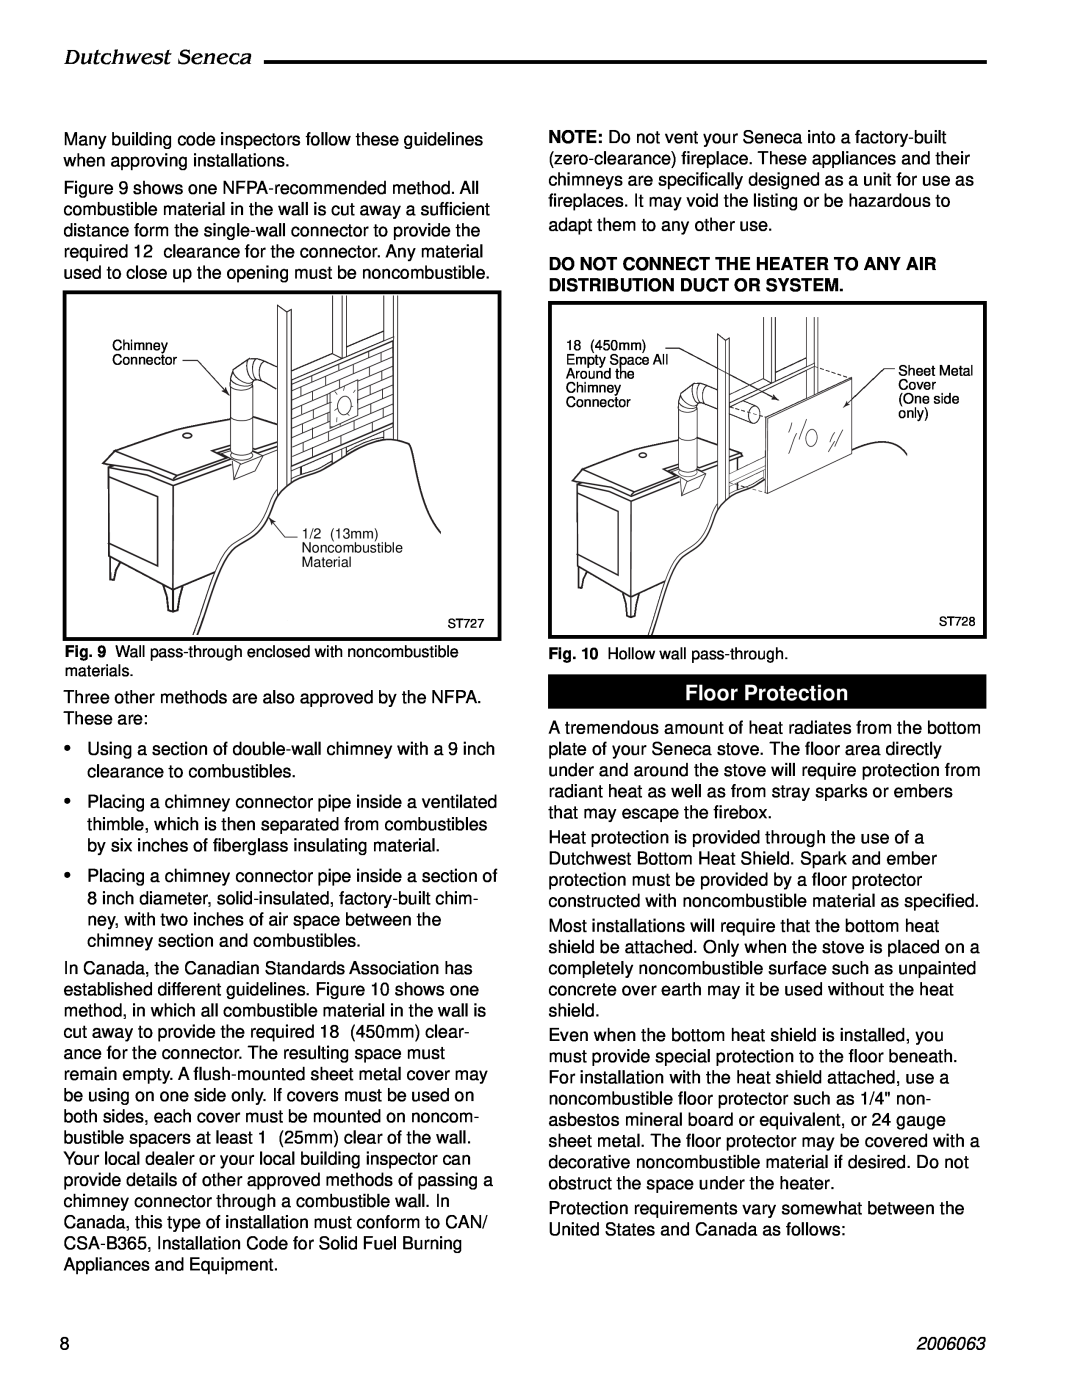 Vermont Casting 2170 manual Floor Protection, Dutchwest Seneca, 2006063 